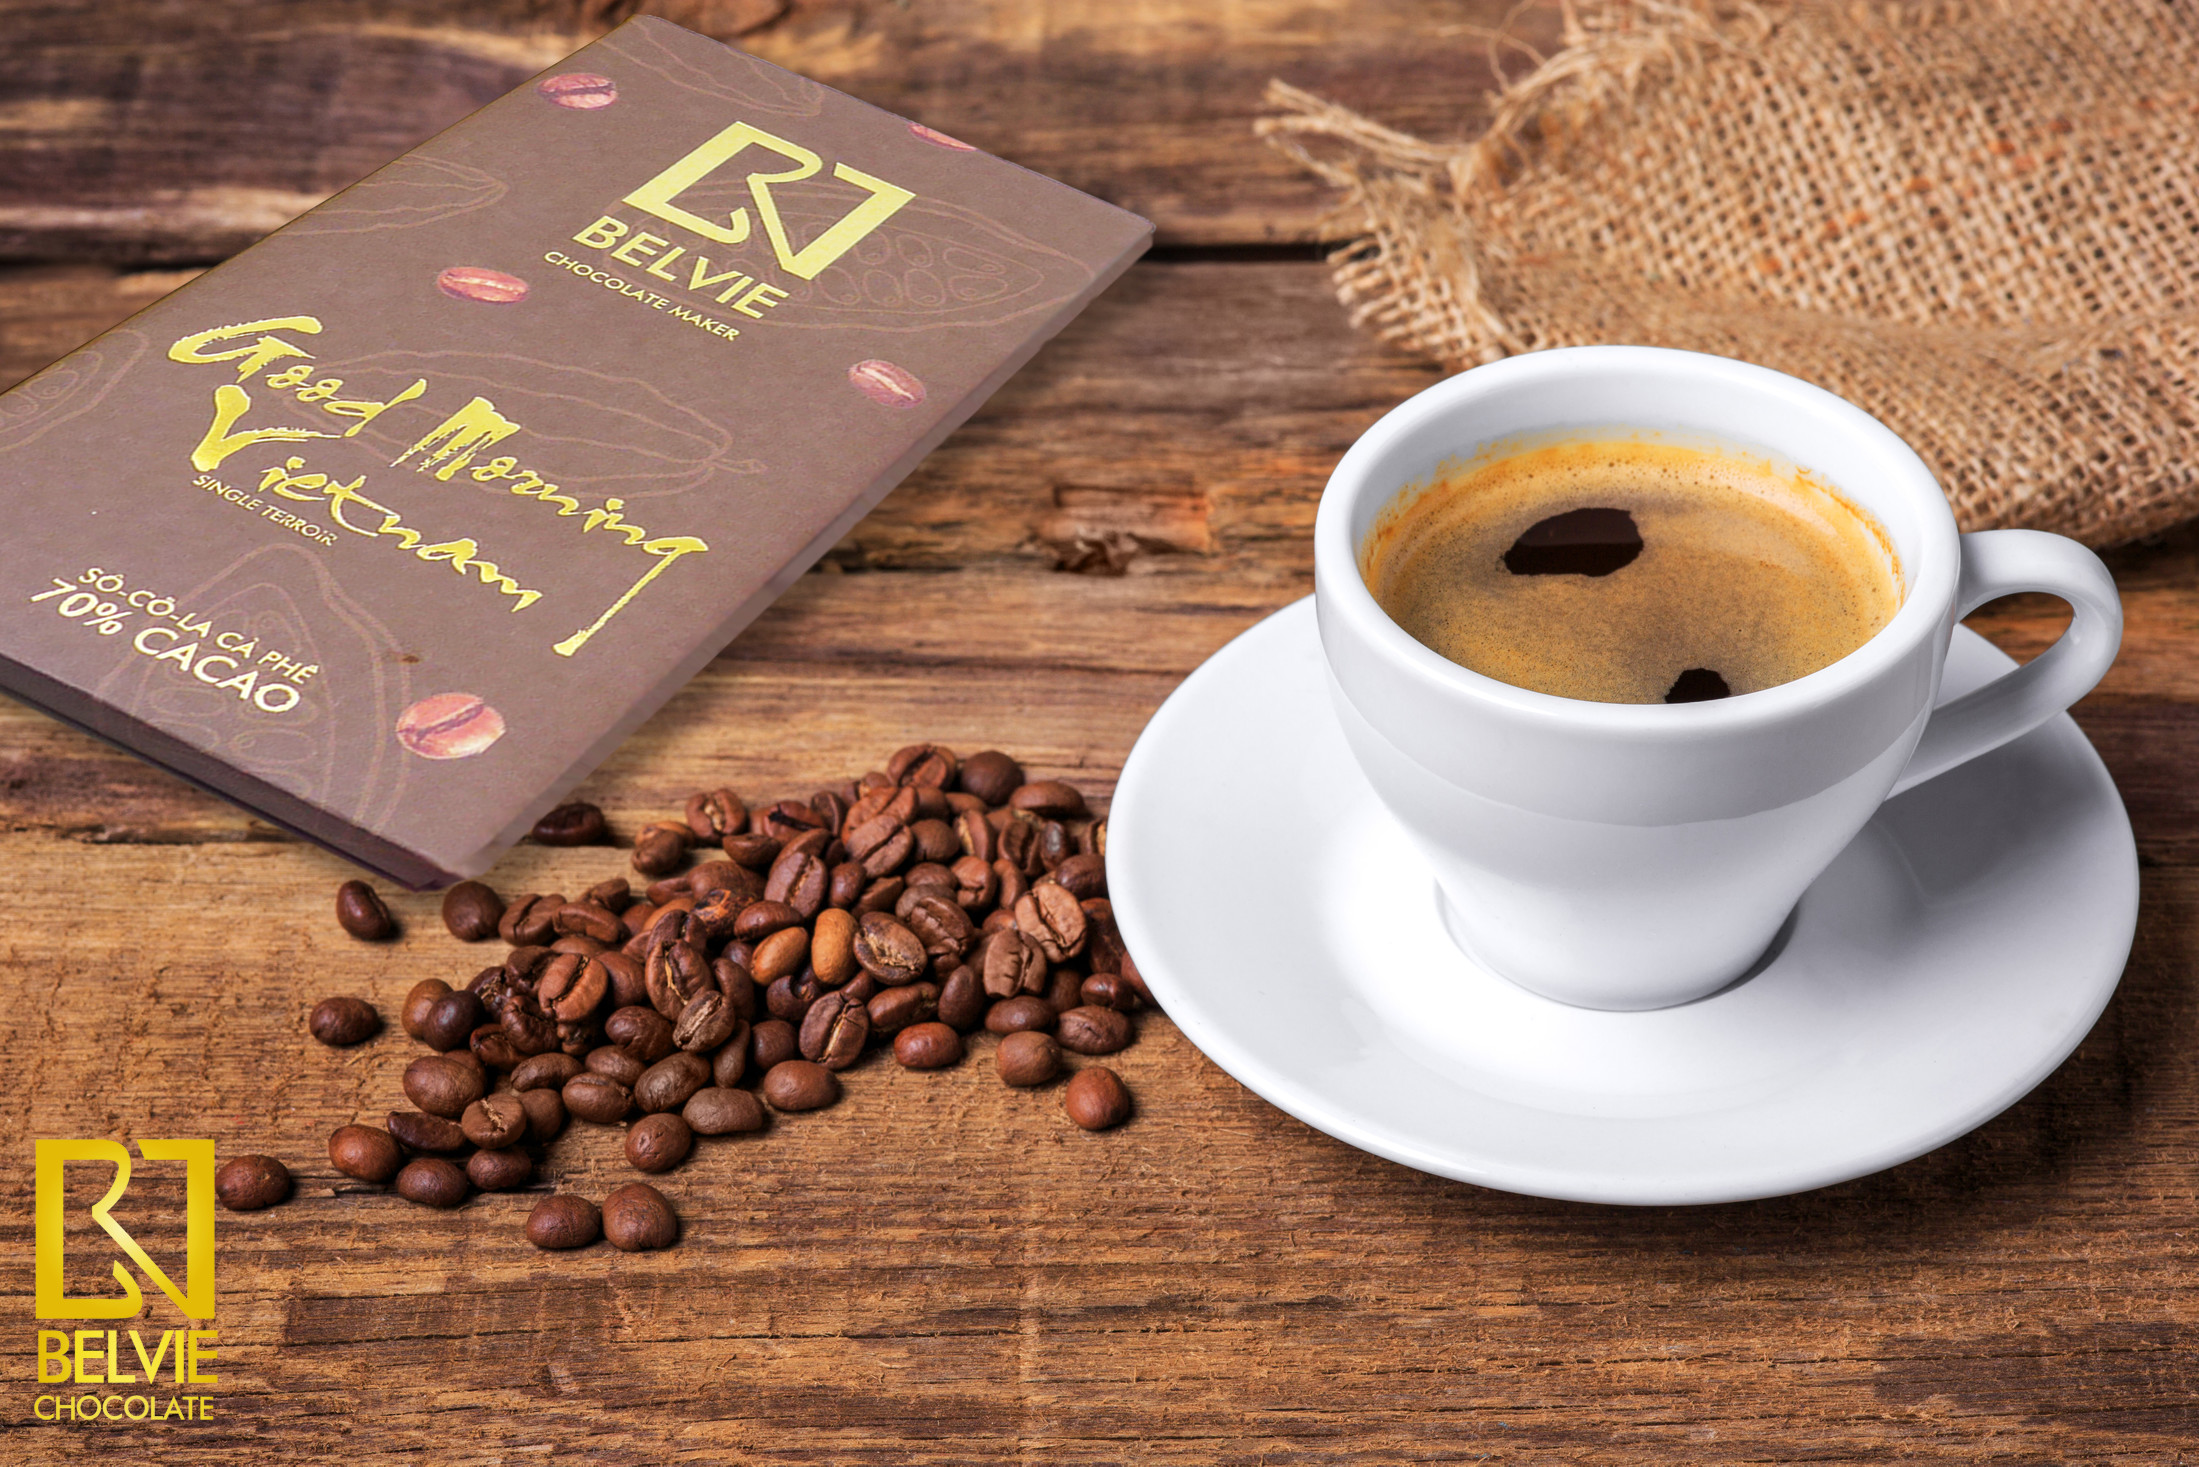 Socola Café Belvie Good Morning 70% Cacao Belvie-GMV80 (80g)